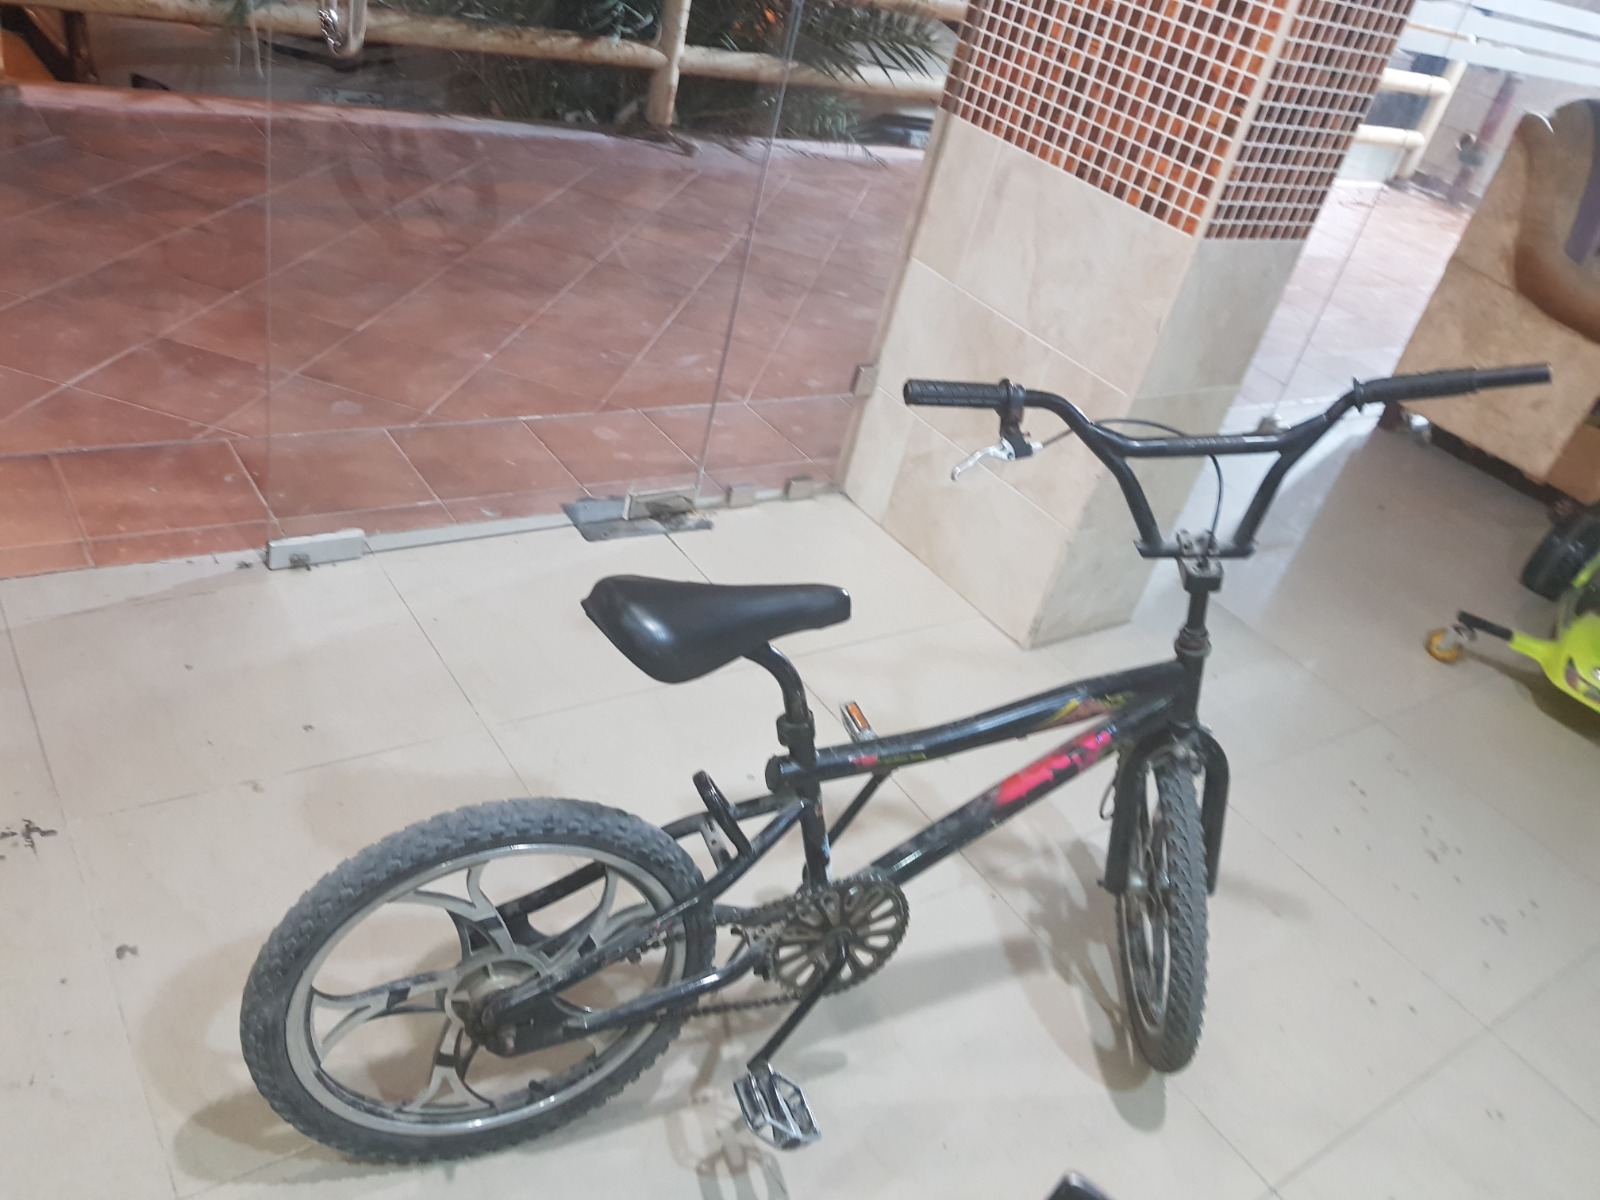  Cycle for sale in salmiya